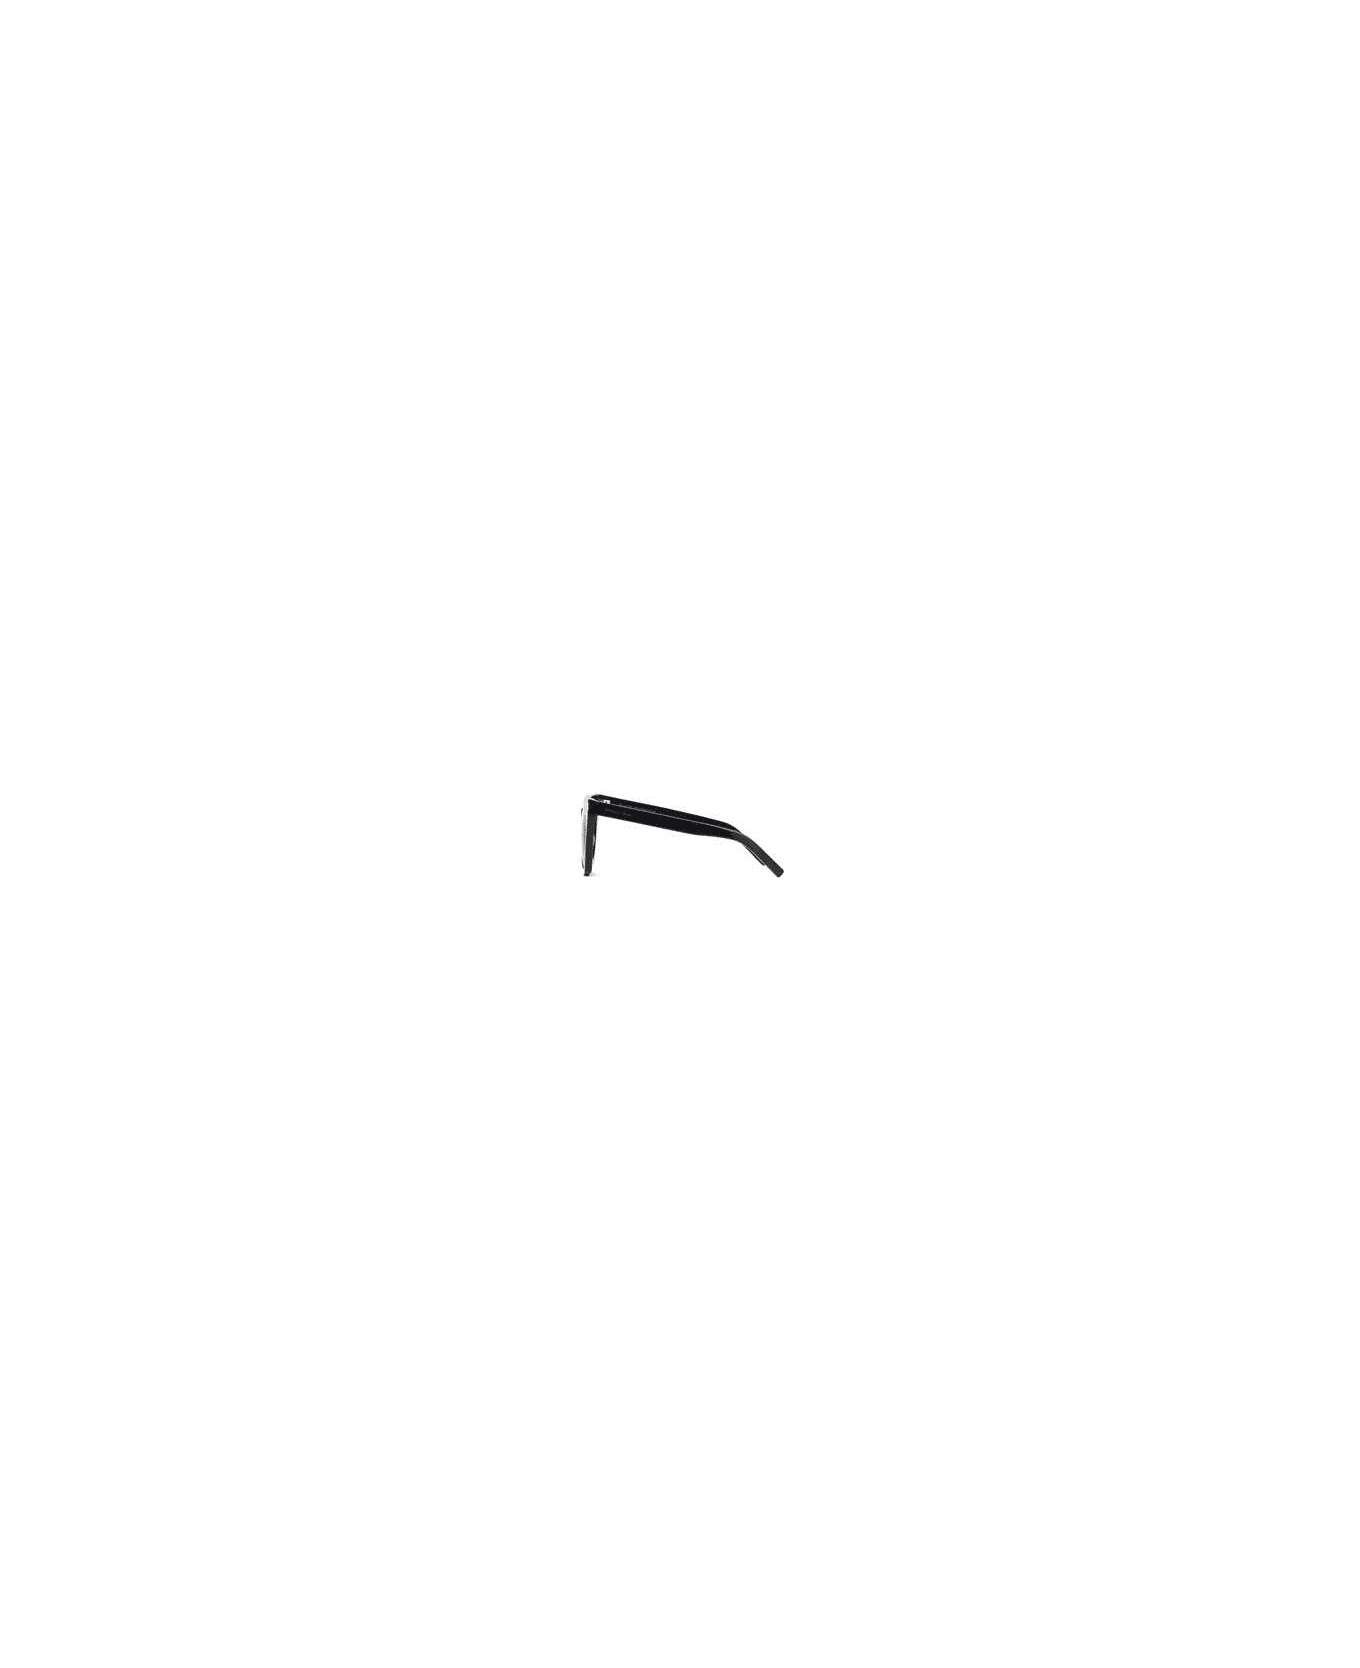 Saint Laurent Eyewear SL 214 KATE Eyewear - Black Black Grey アイウェア